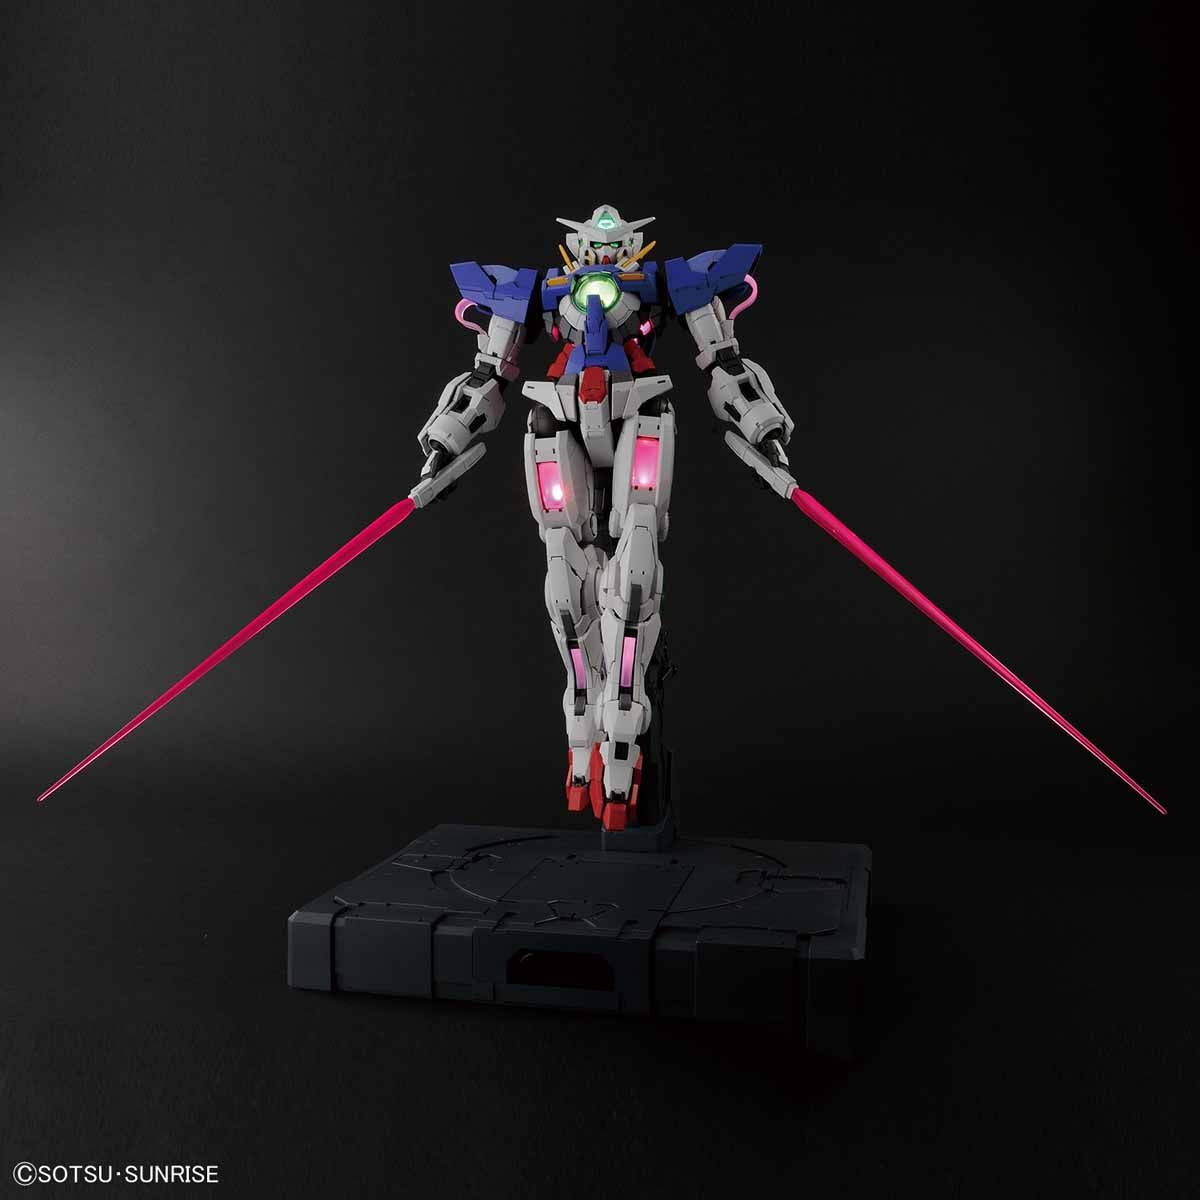 PG 1/60 Perfect Grade Gundam Exia (Lighting Model)